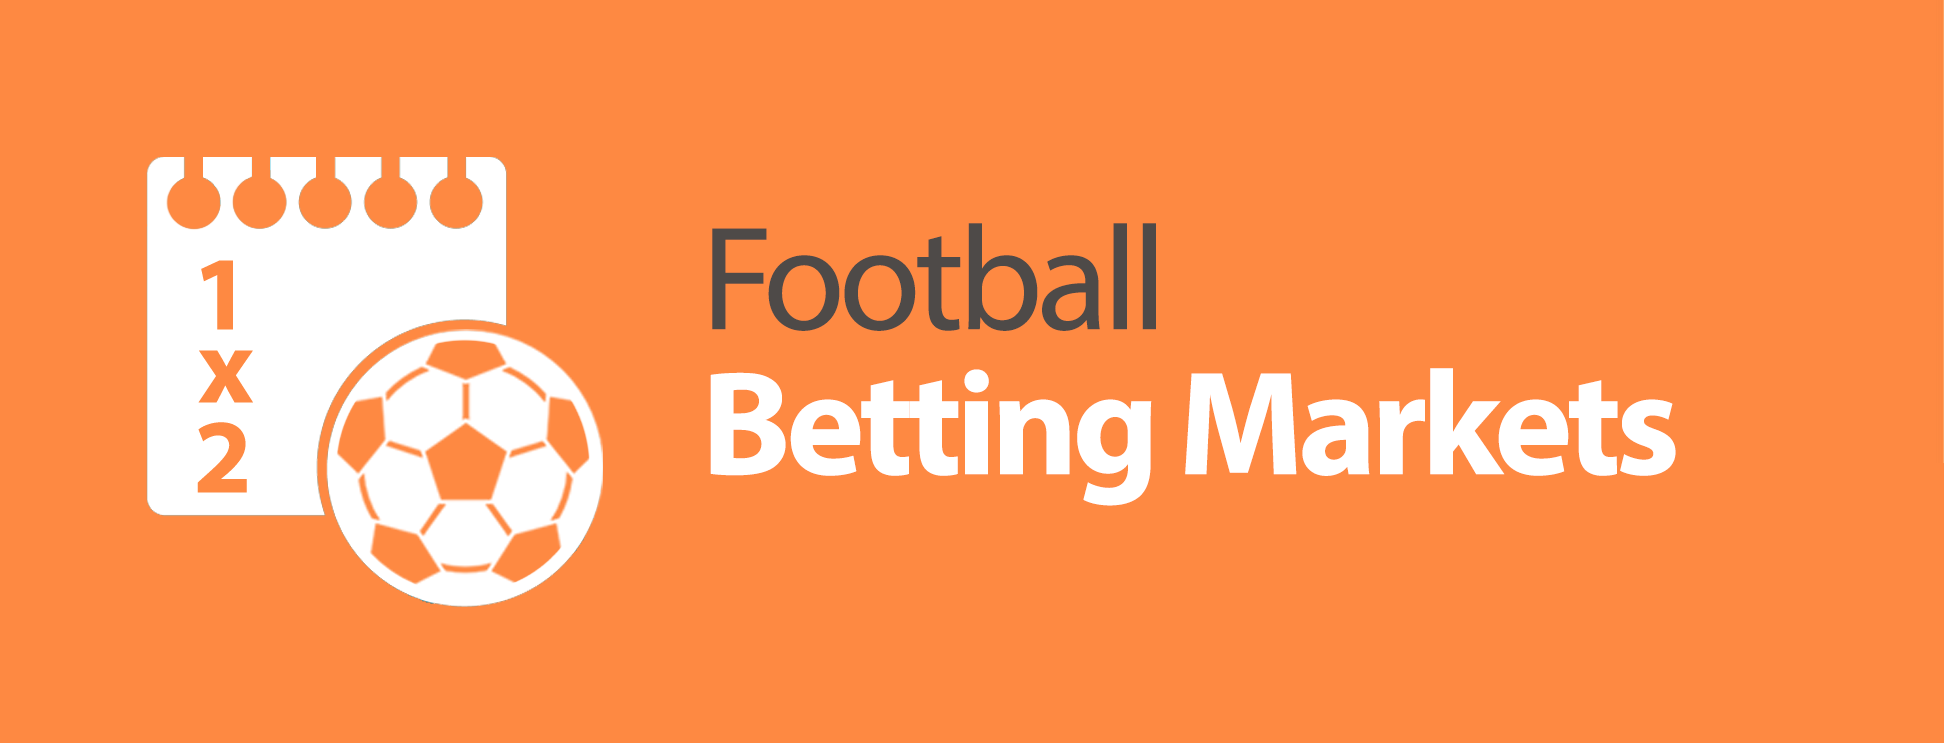 Football Betting Marketss